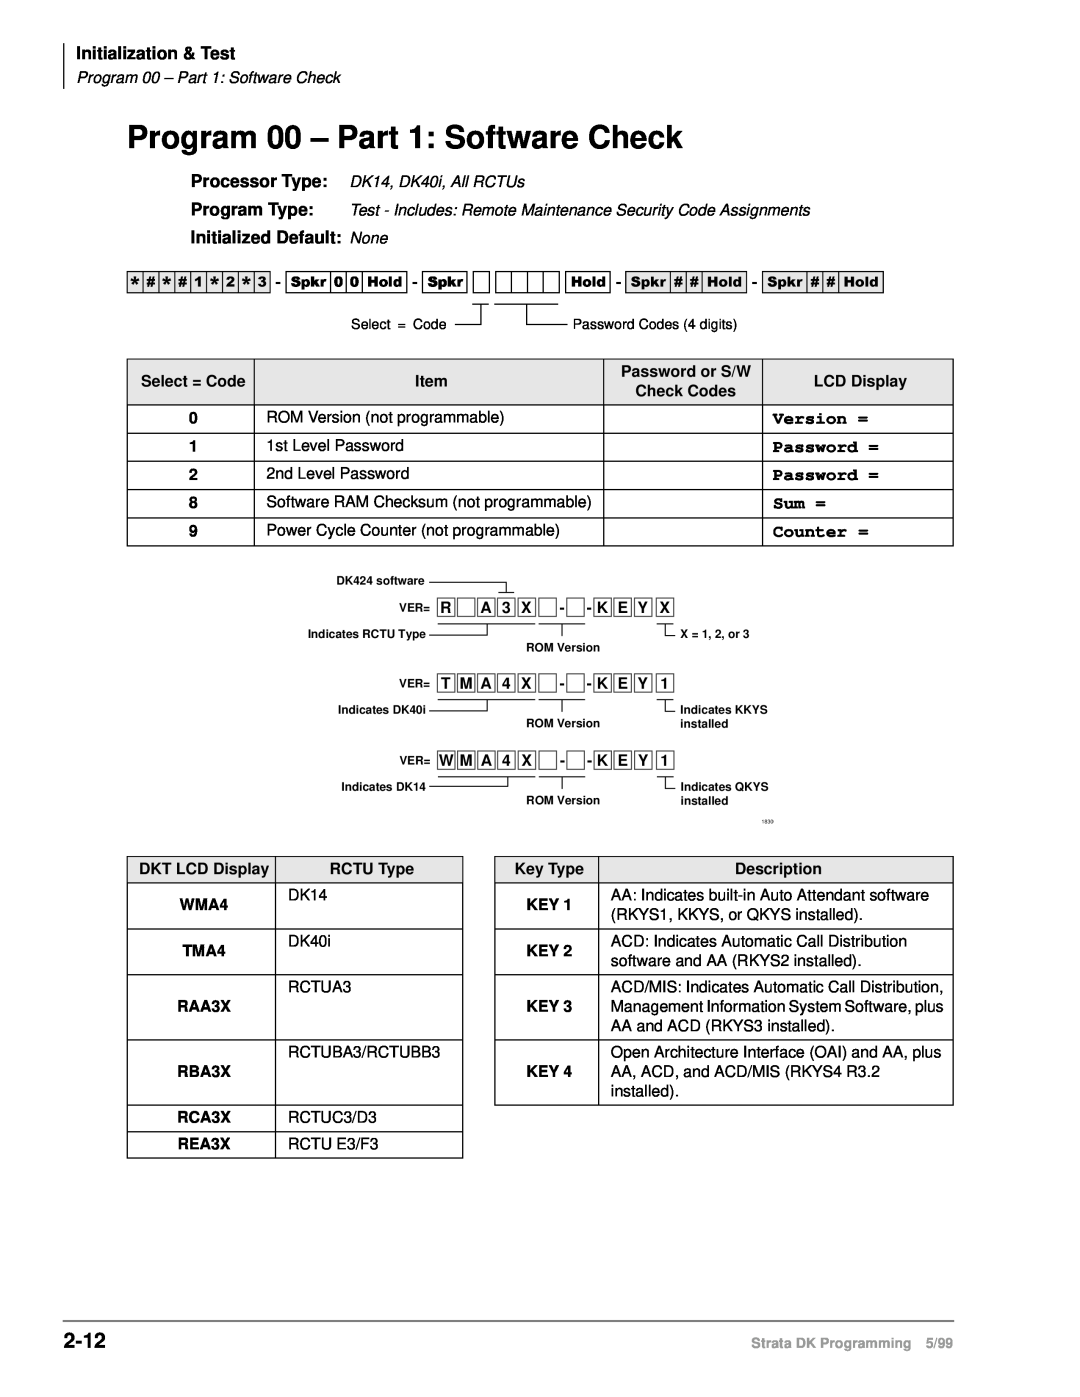 Toshiba dk14 Program 00 – Part 1: Software Check, 2-12, 6SNU+ROG6SNU+ROG6SNU+ROG6SNU+ROG, Initialization & Test, Version = 